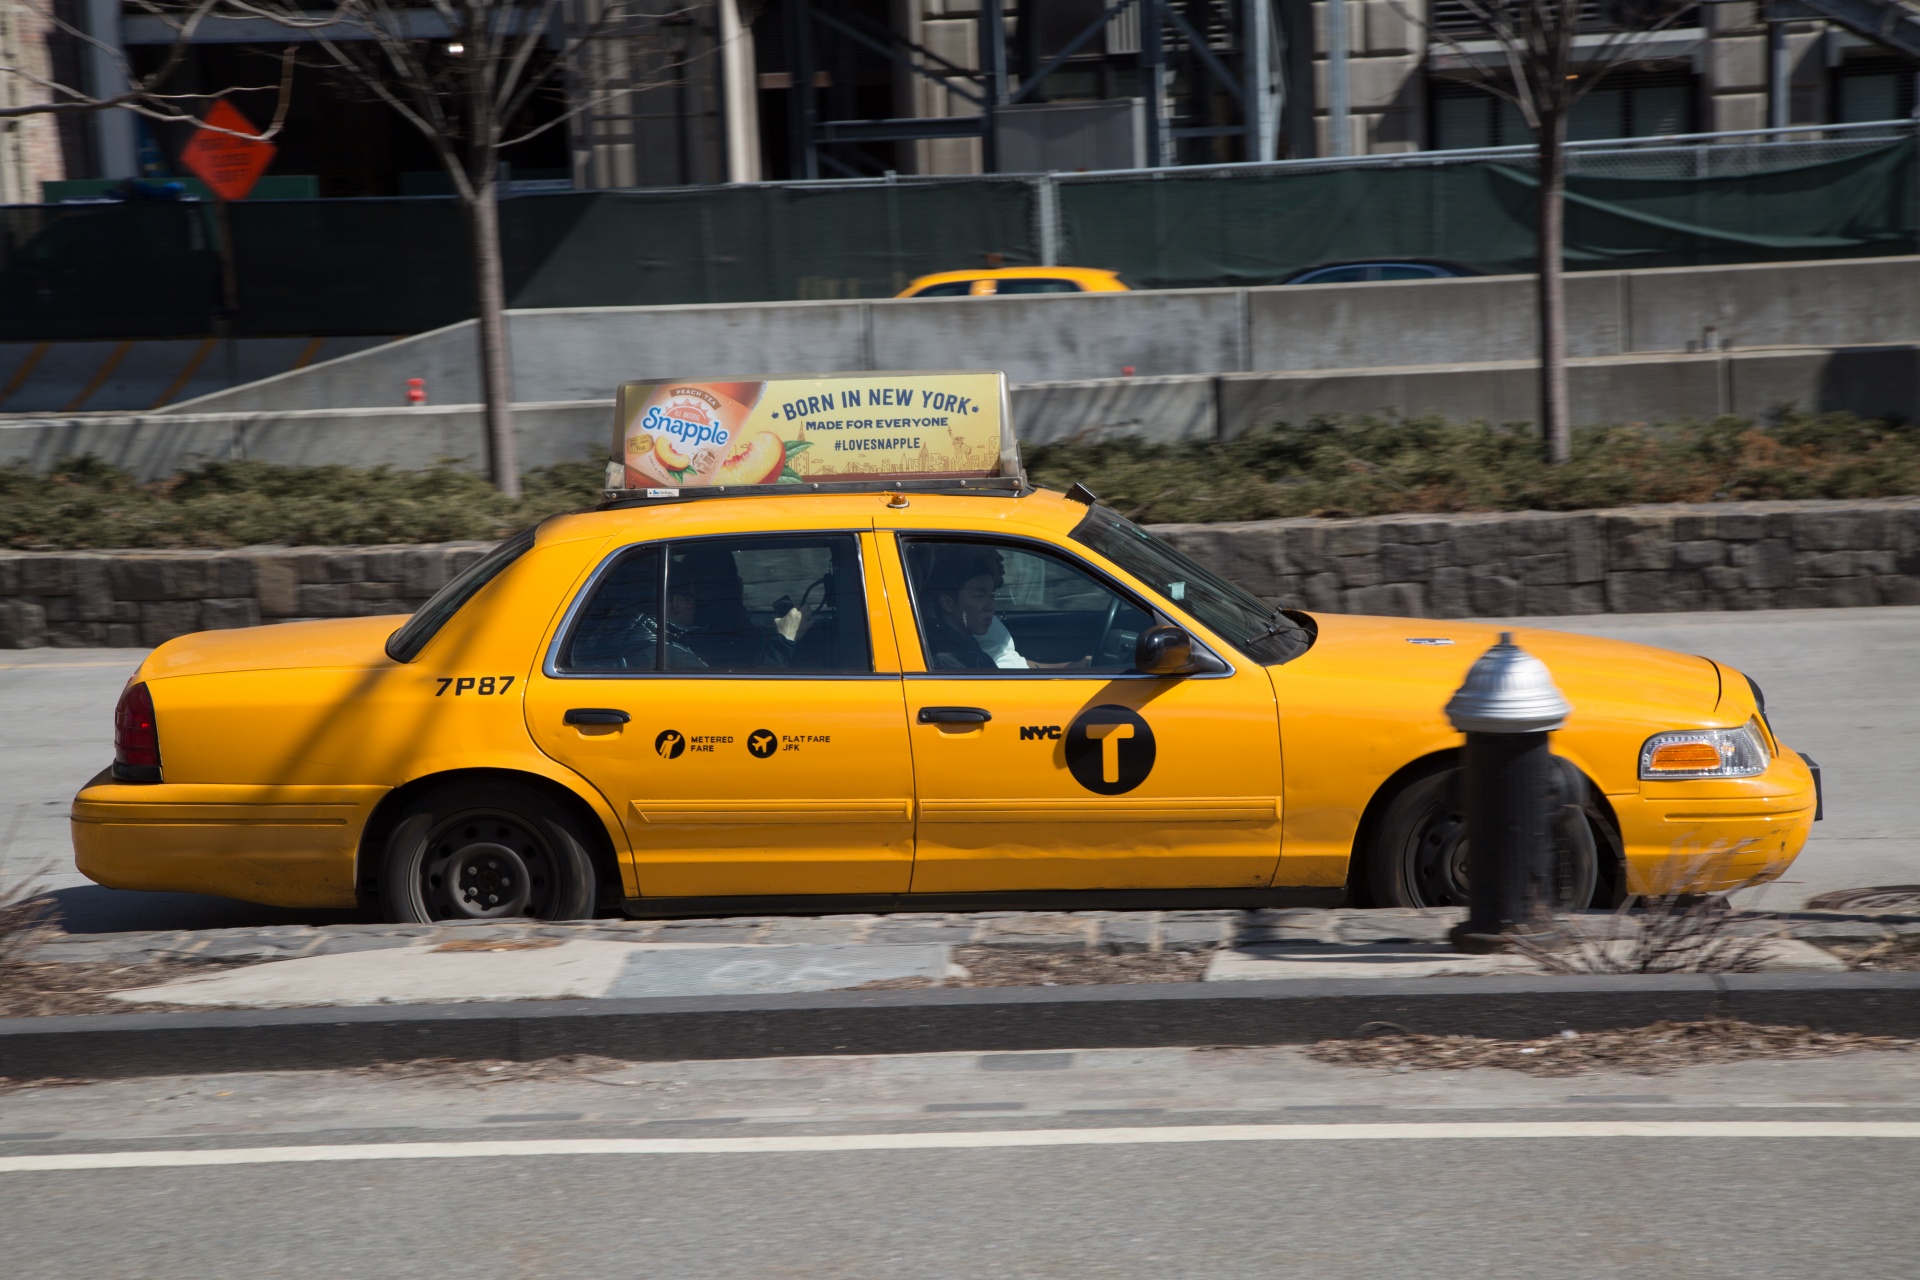 Taxi - Simple English Wikipedia, the free encyclopedia